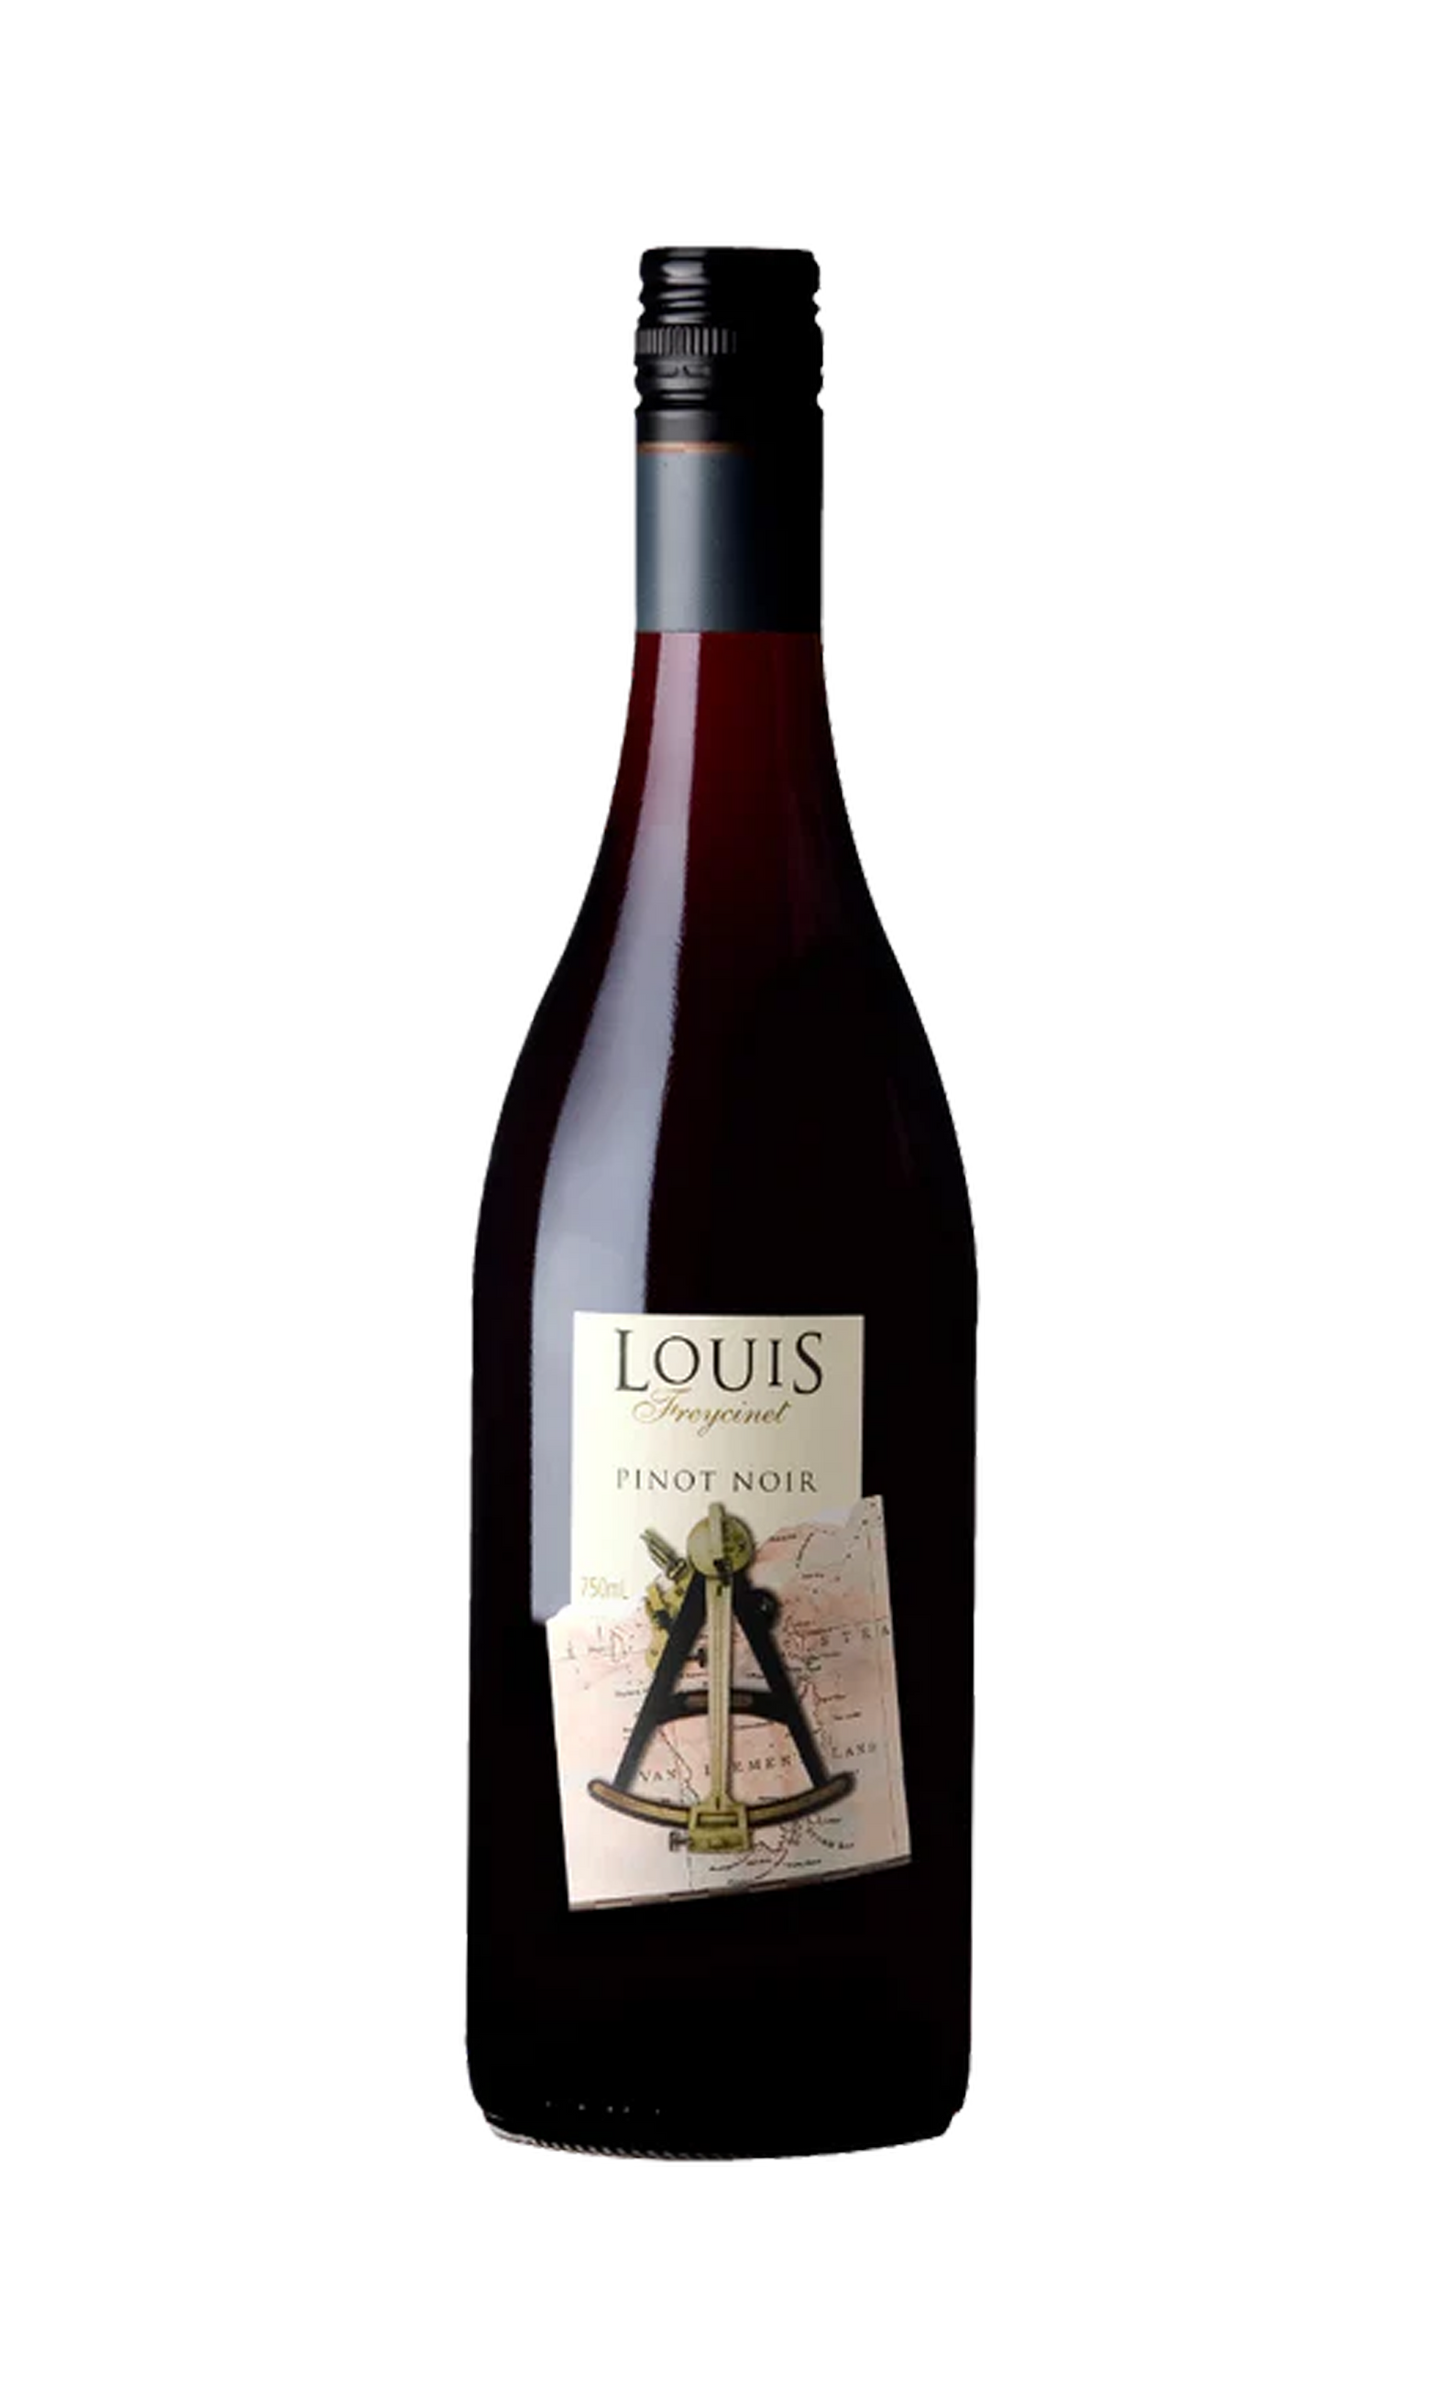 Freycinet Louis Pinot Noir 2021